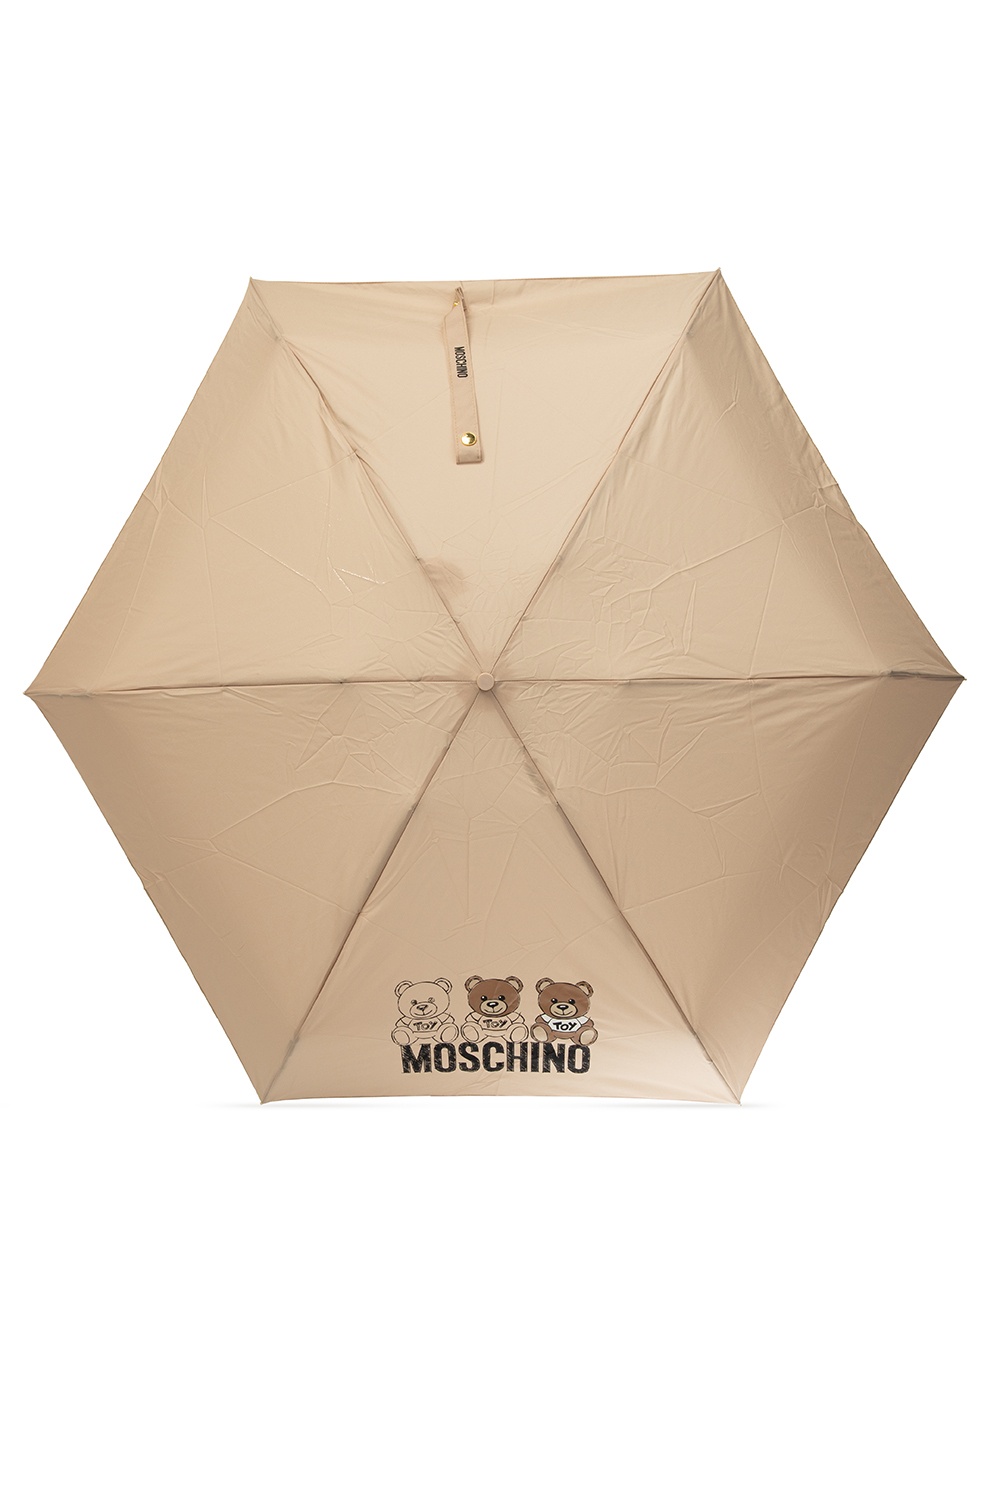 Moschino travis scott air jordan 6 merch apparel collection